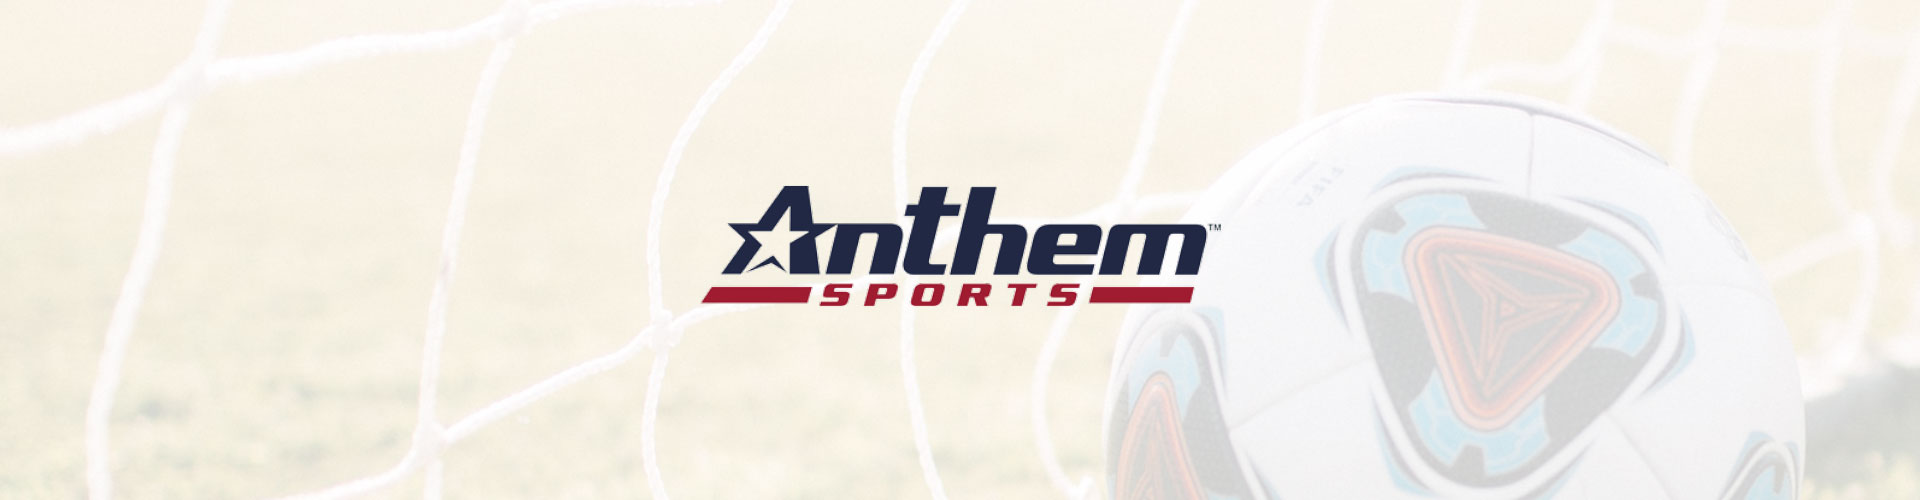 Anthem Sports banner